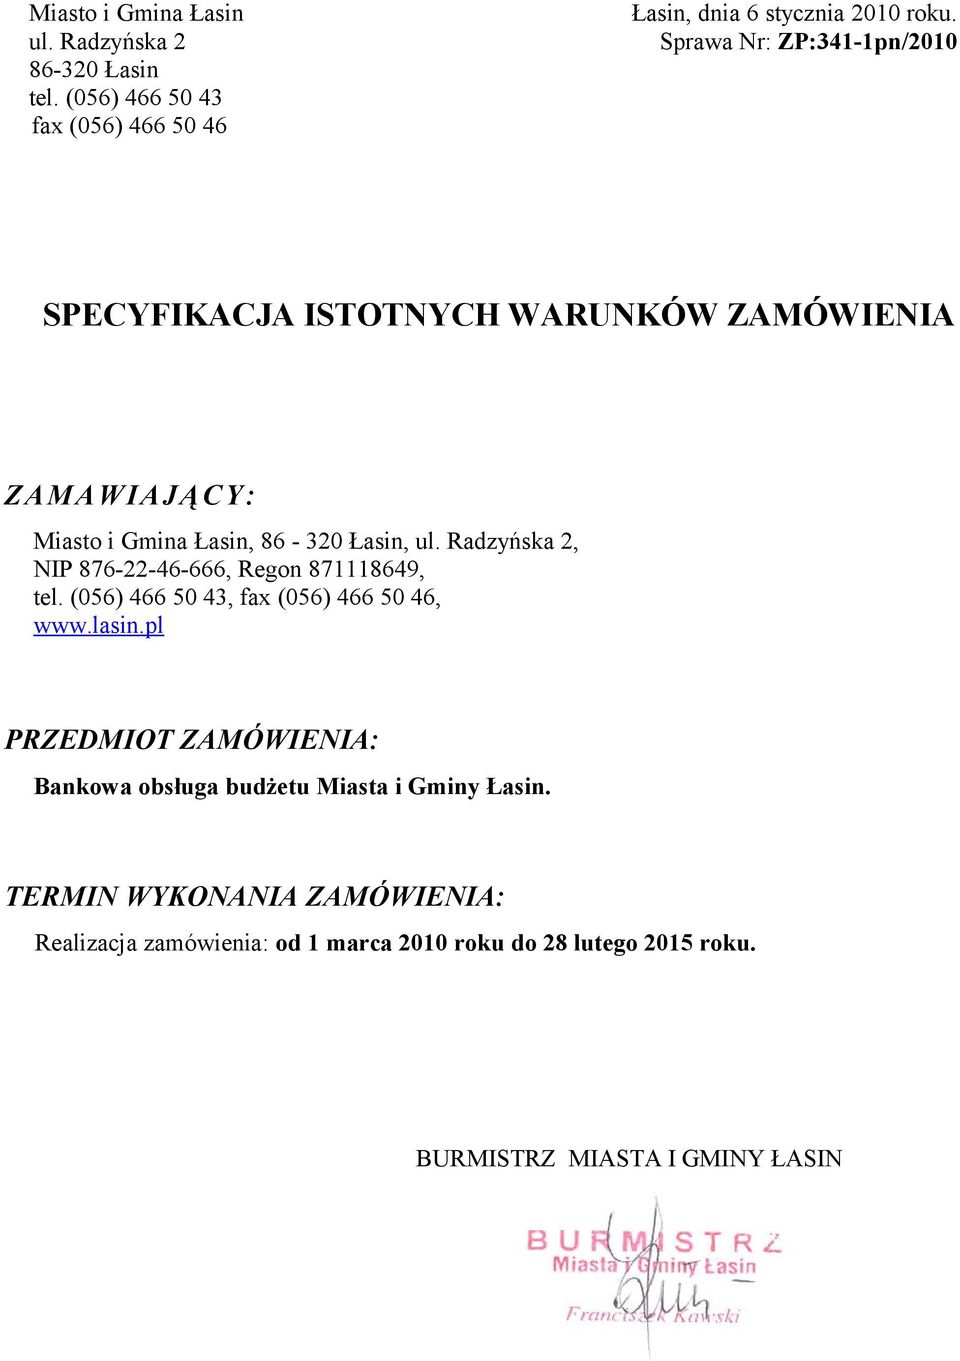 Radzyńska 2, NIP 876-22-46-666, Regon 871118649, tel. (056) 466 50 43, fax (056) 466 50 46, www.lasin.